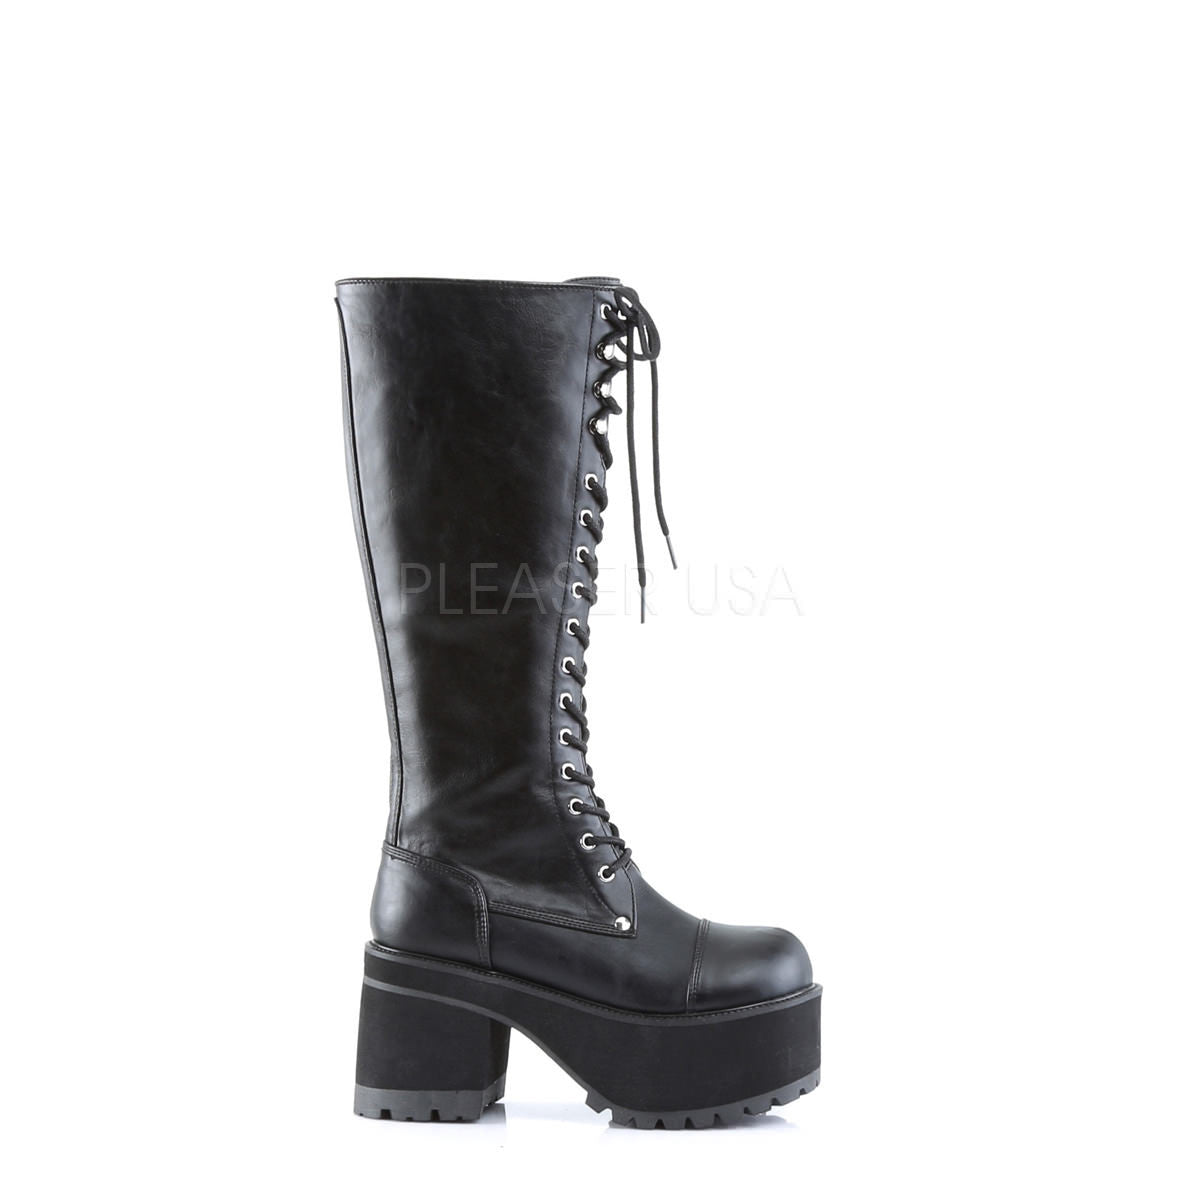 DEMONIA RANGER-302 Men's Black Pu Vegan Boots - Shoecup.com - 3